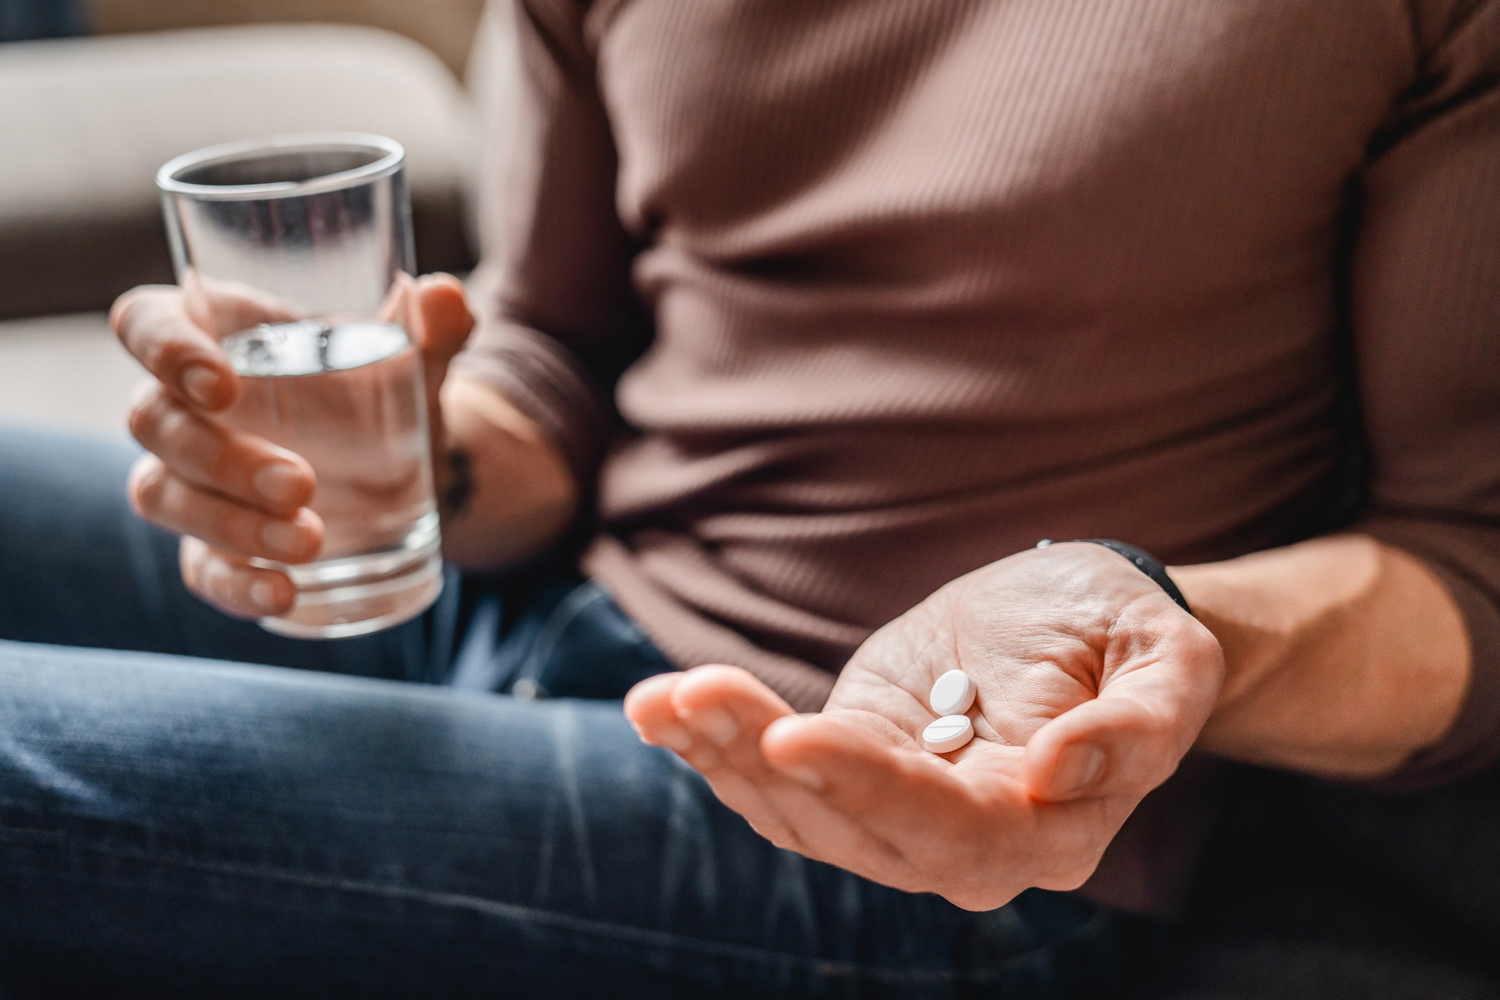 Regular Aspirin Use May Help Fight Colorectal Cancer